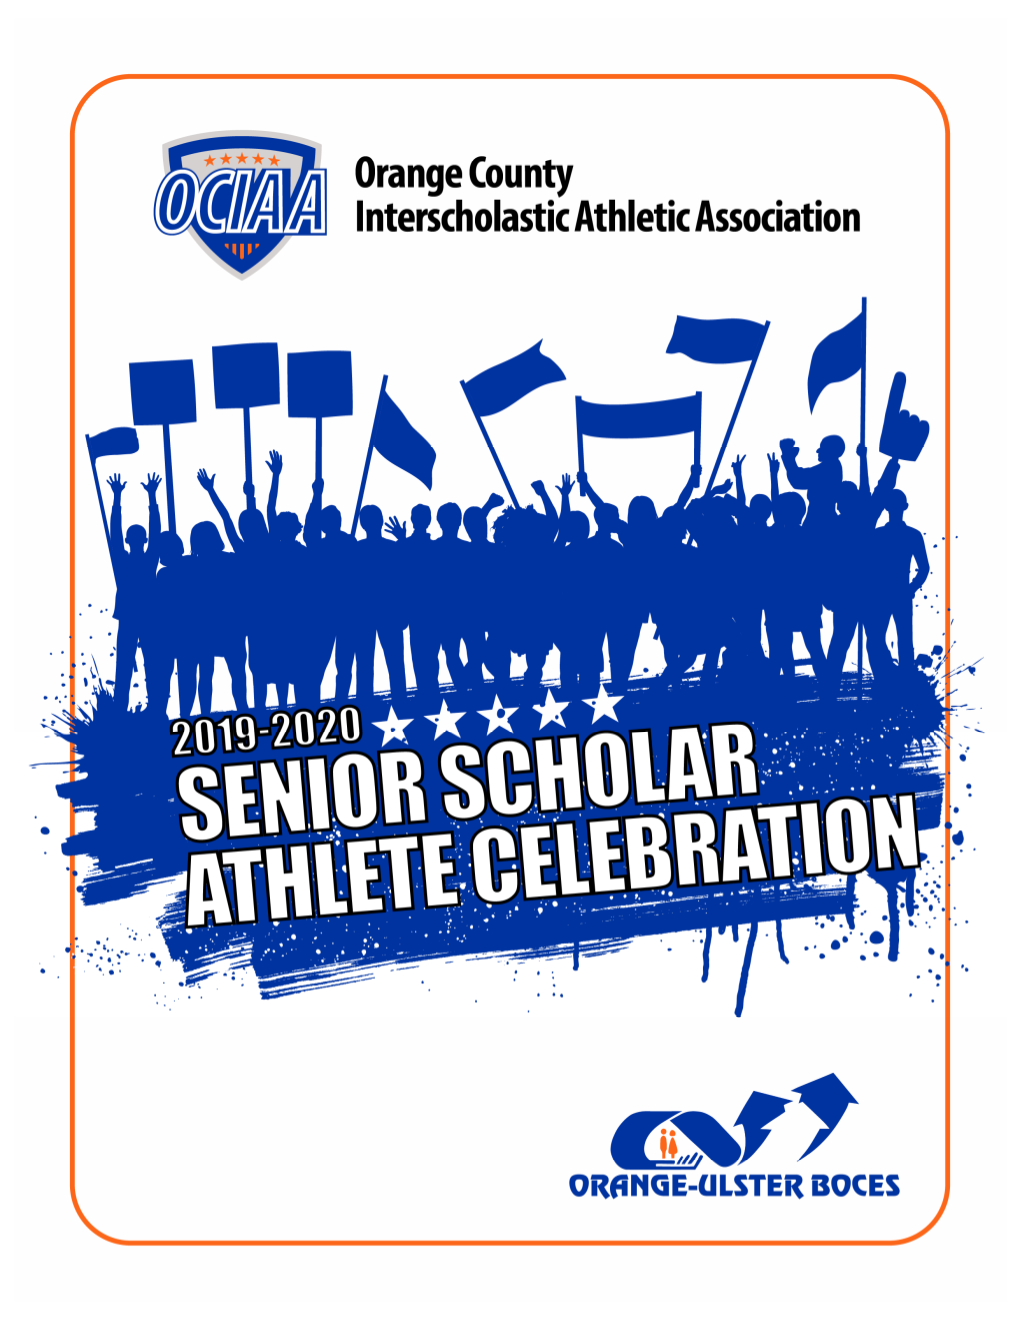 Ociaa Senior Scholar Athlete Awards